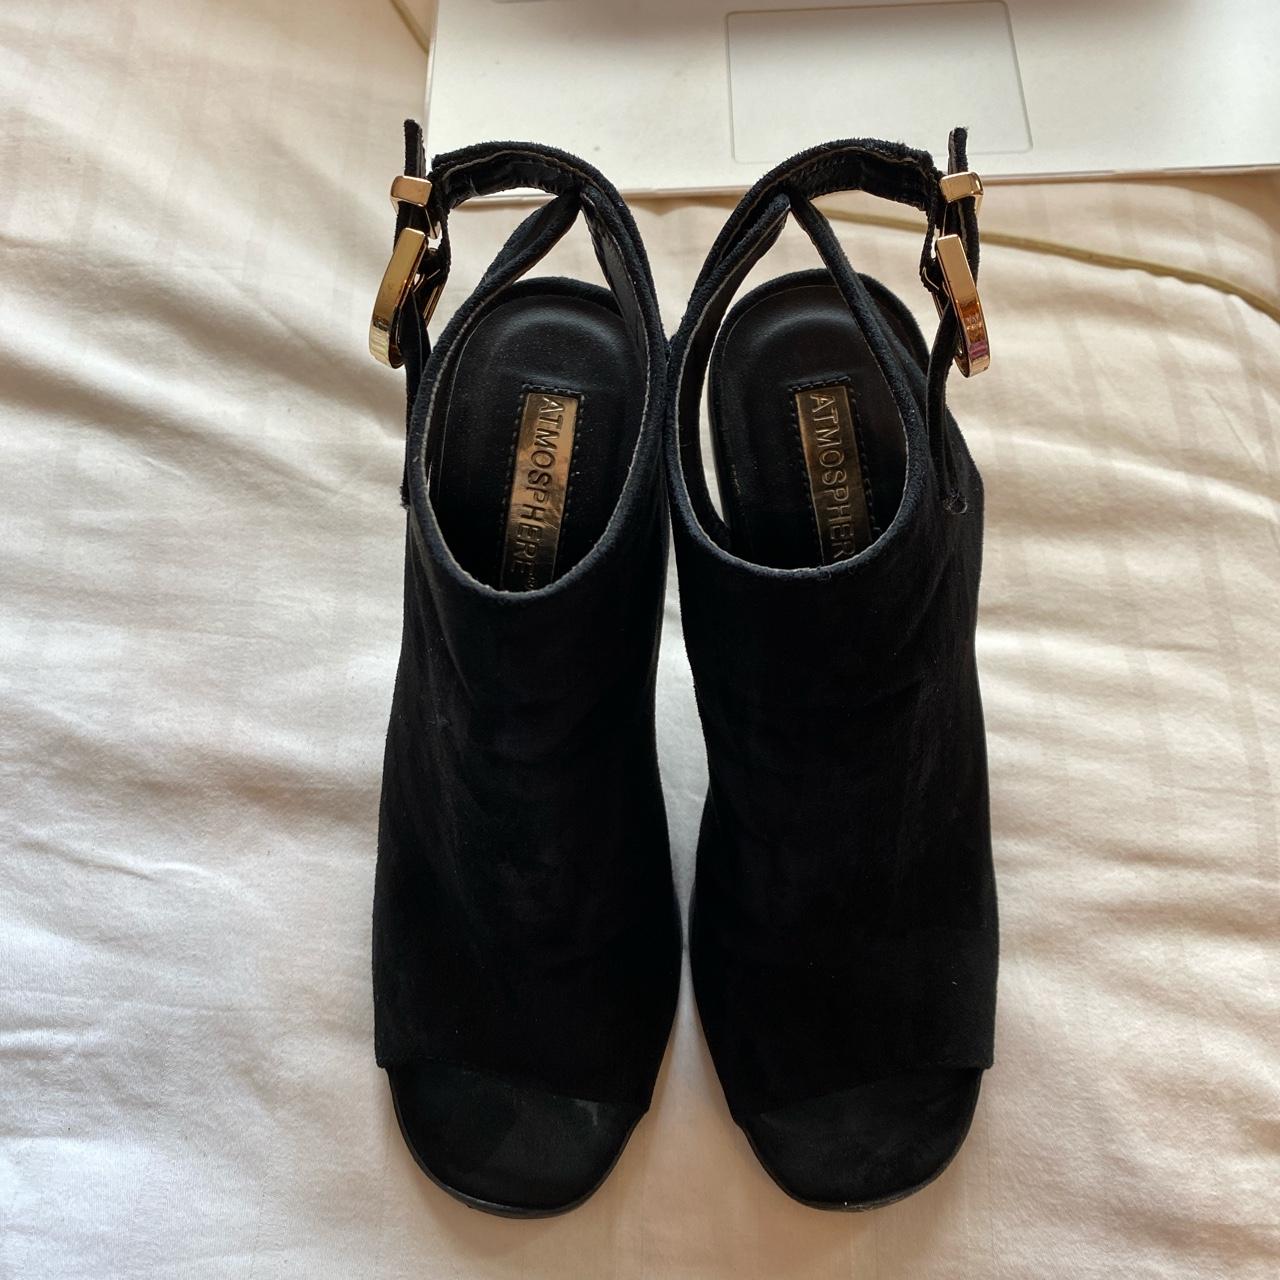 Black suede primark shoe boots size 5 - Depop